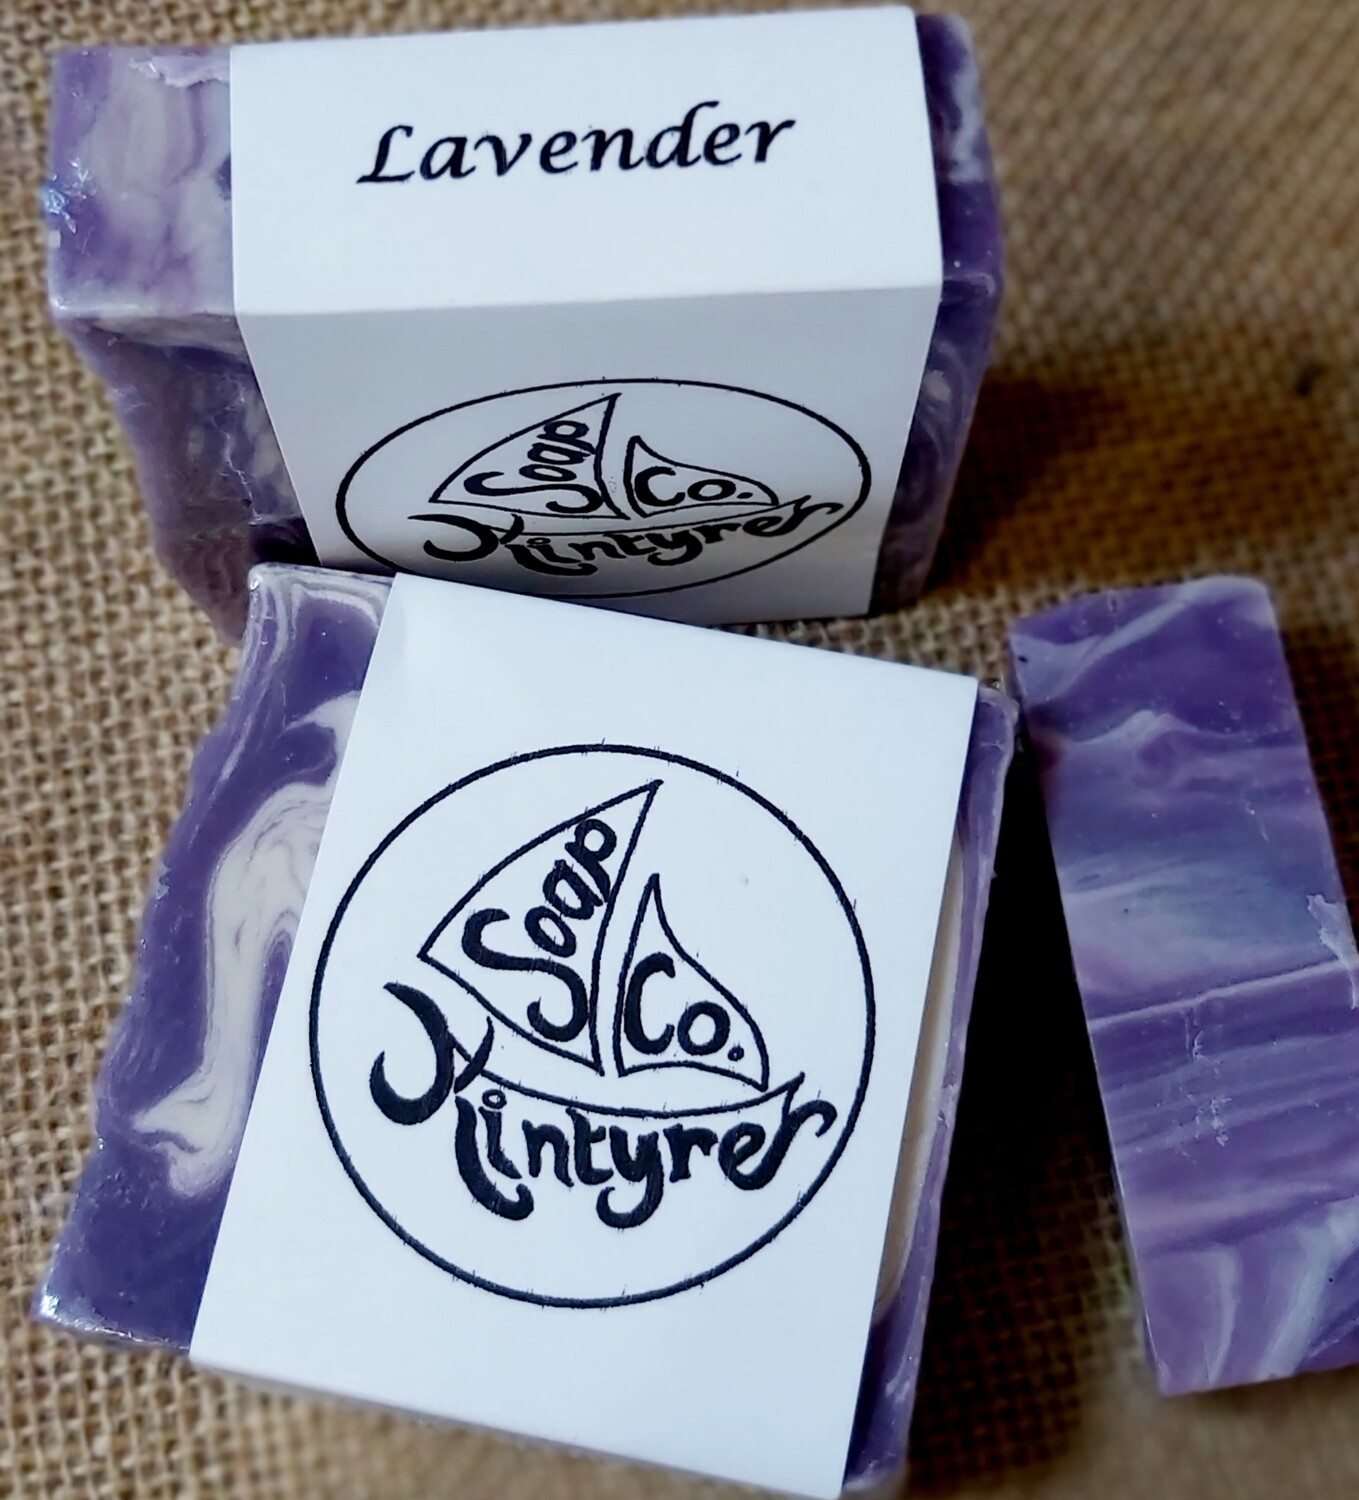 'Lavender' cold processed soap